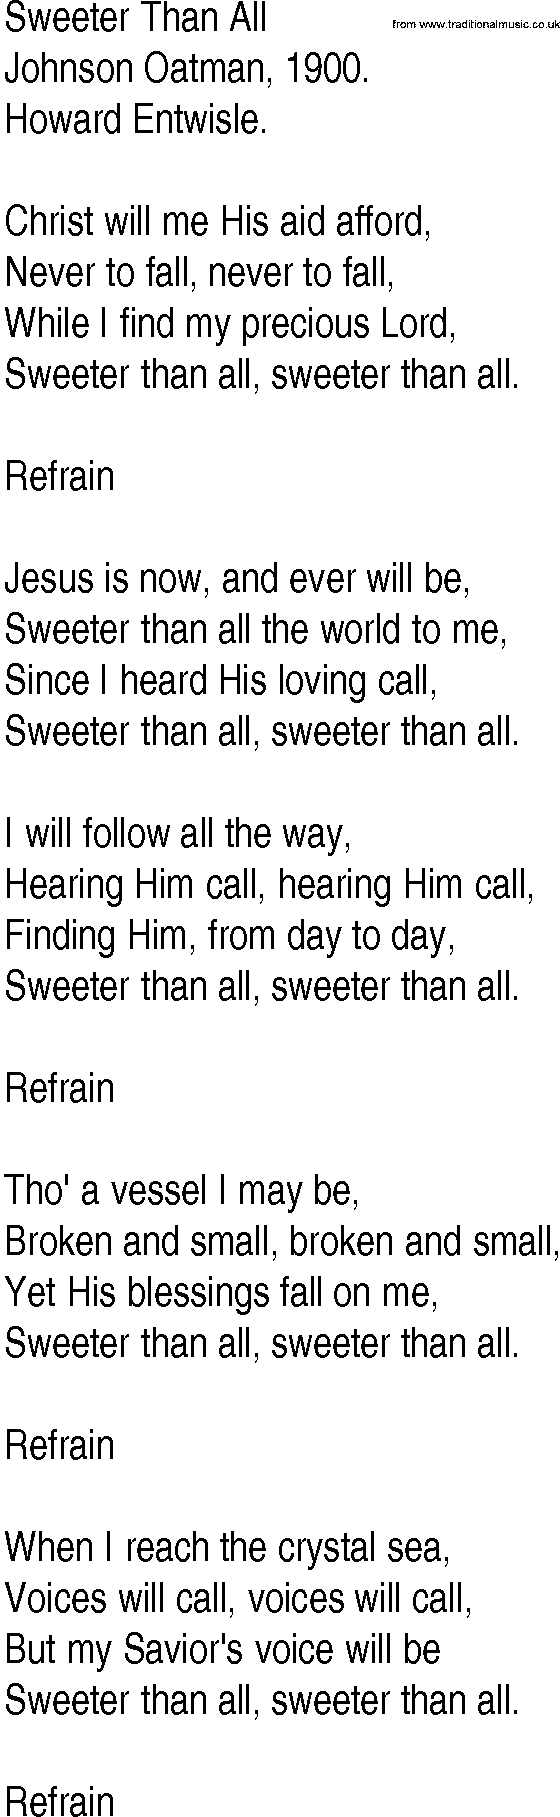 Hymn and Gospel Song: Sweeter Than All by Johnson Oatman lyrics